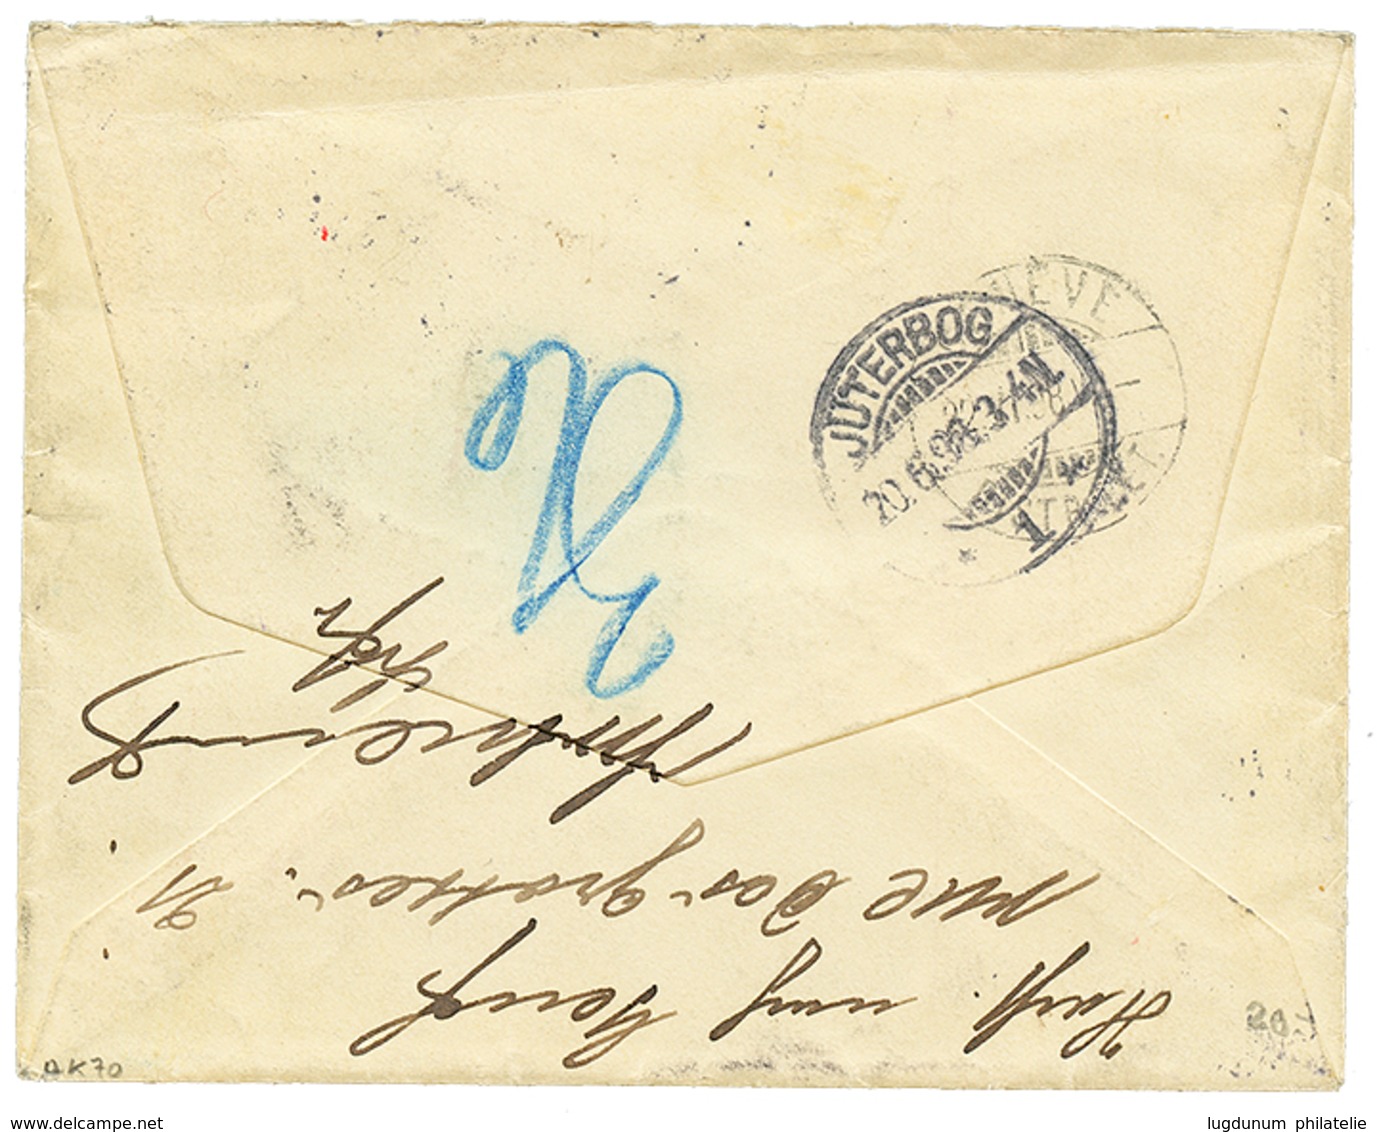 1100 1898 10pf(x2) + 20pf Canc. TSINTANFORT On REGISTERED Envelope To GERMANY. Vvf. - Kiautchou